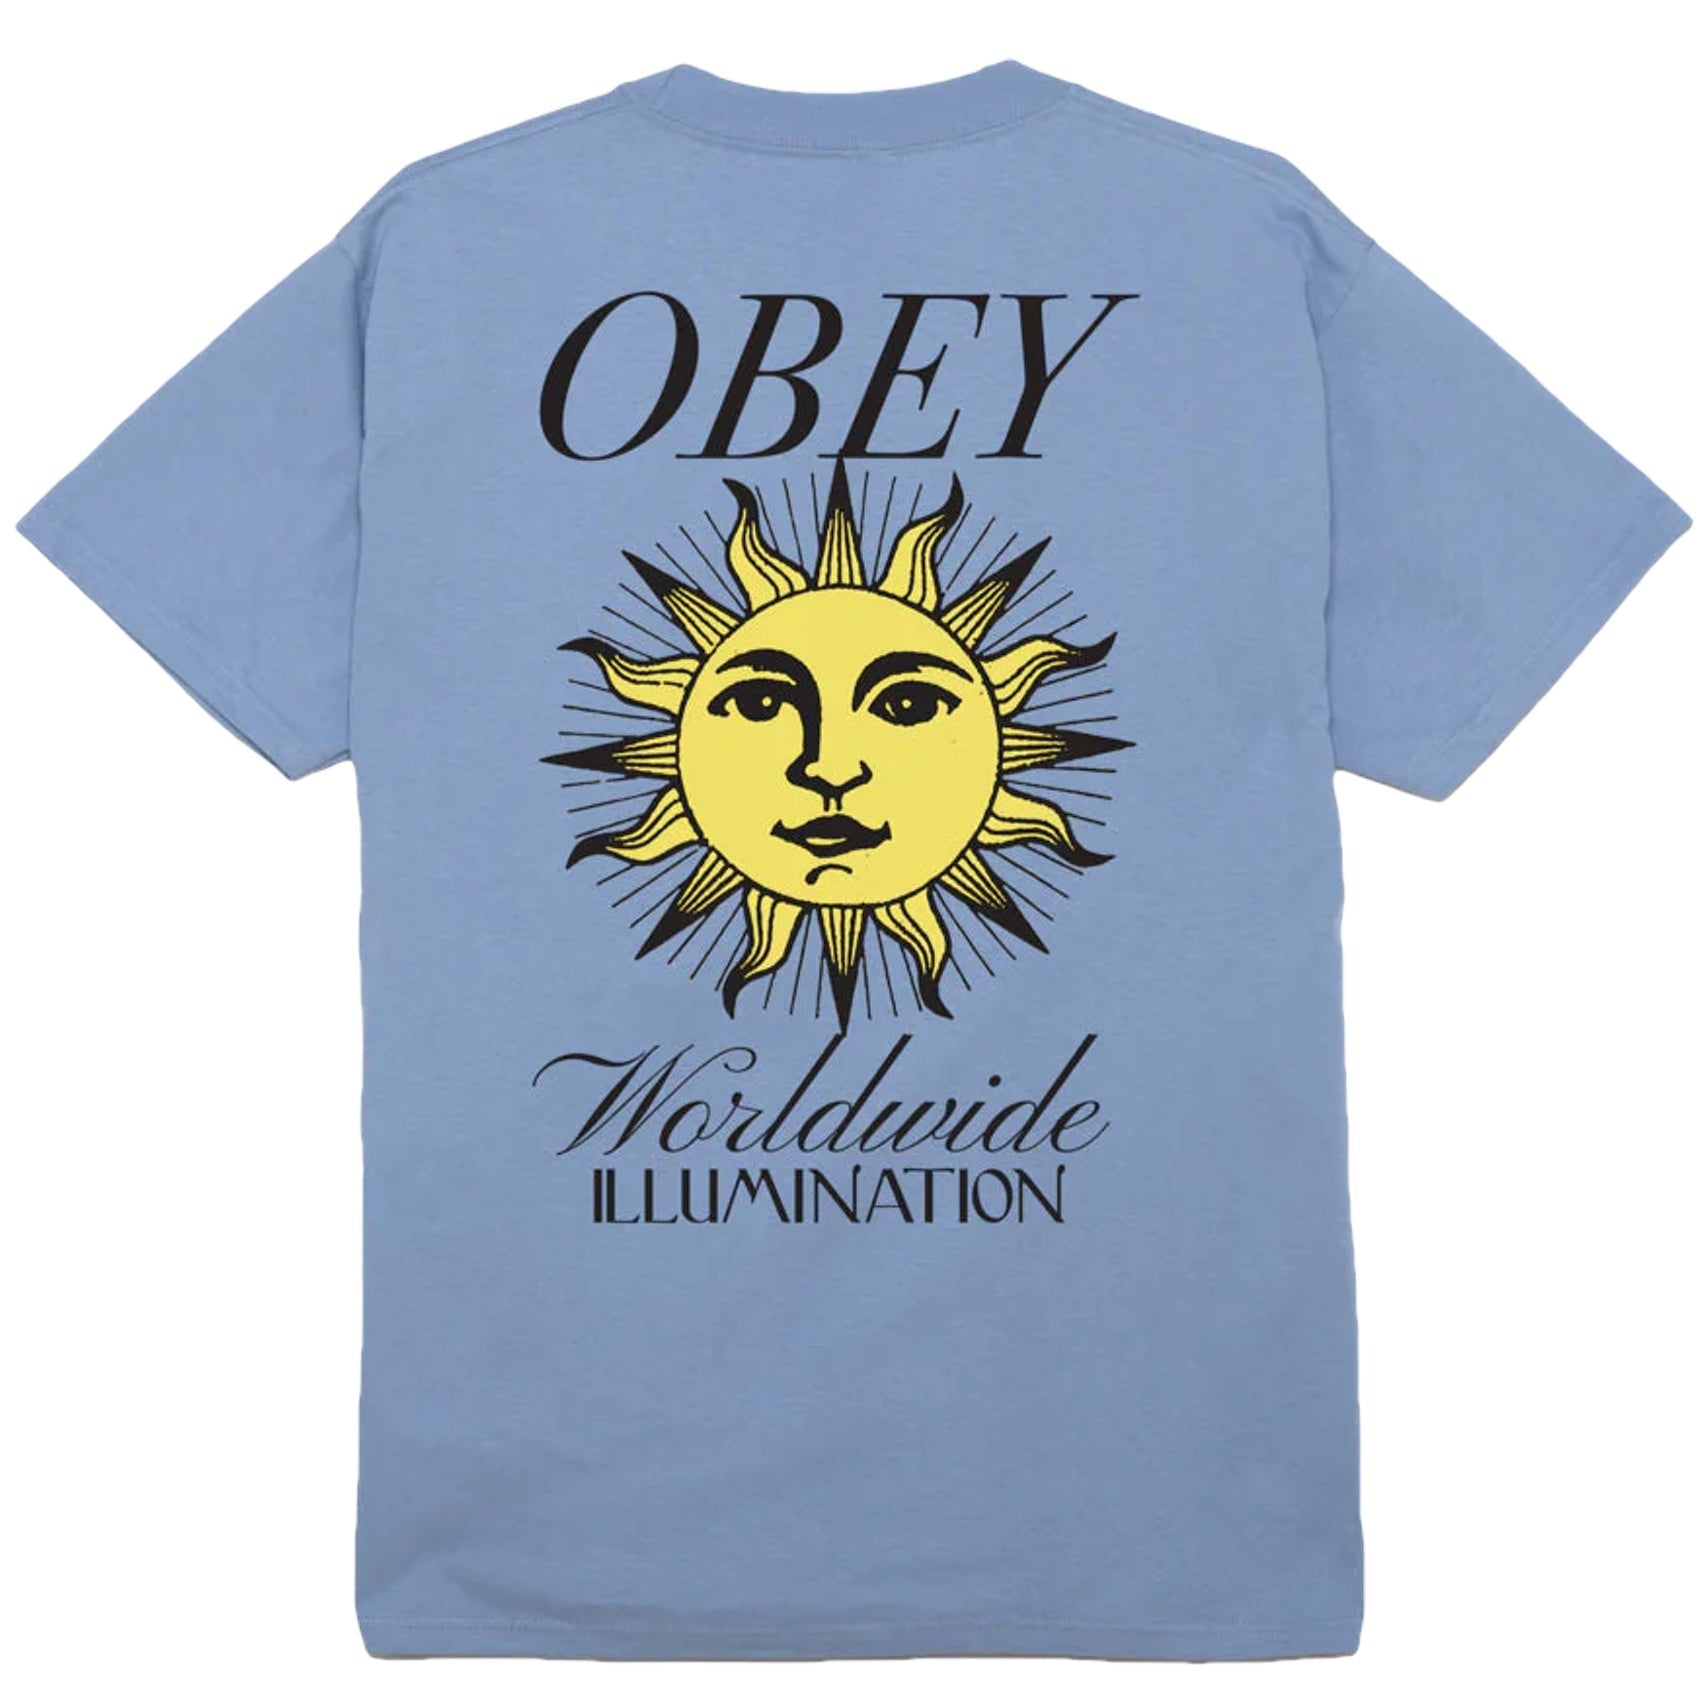 Obey illumination T-Shirt - Digital Violet